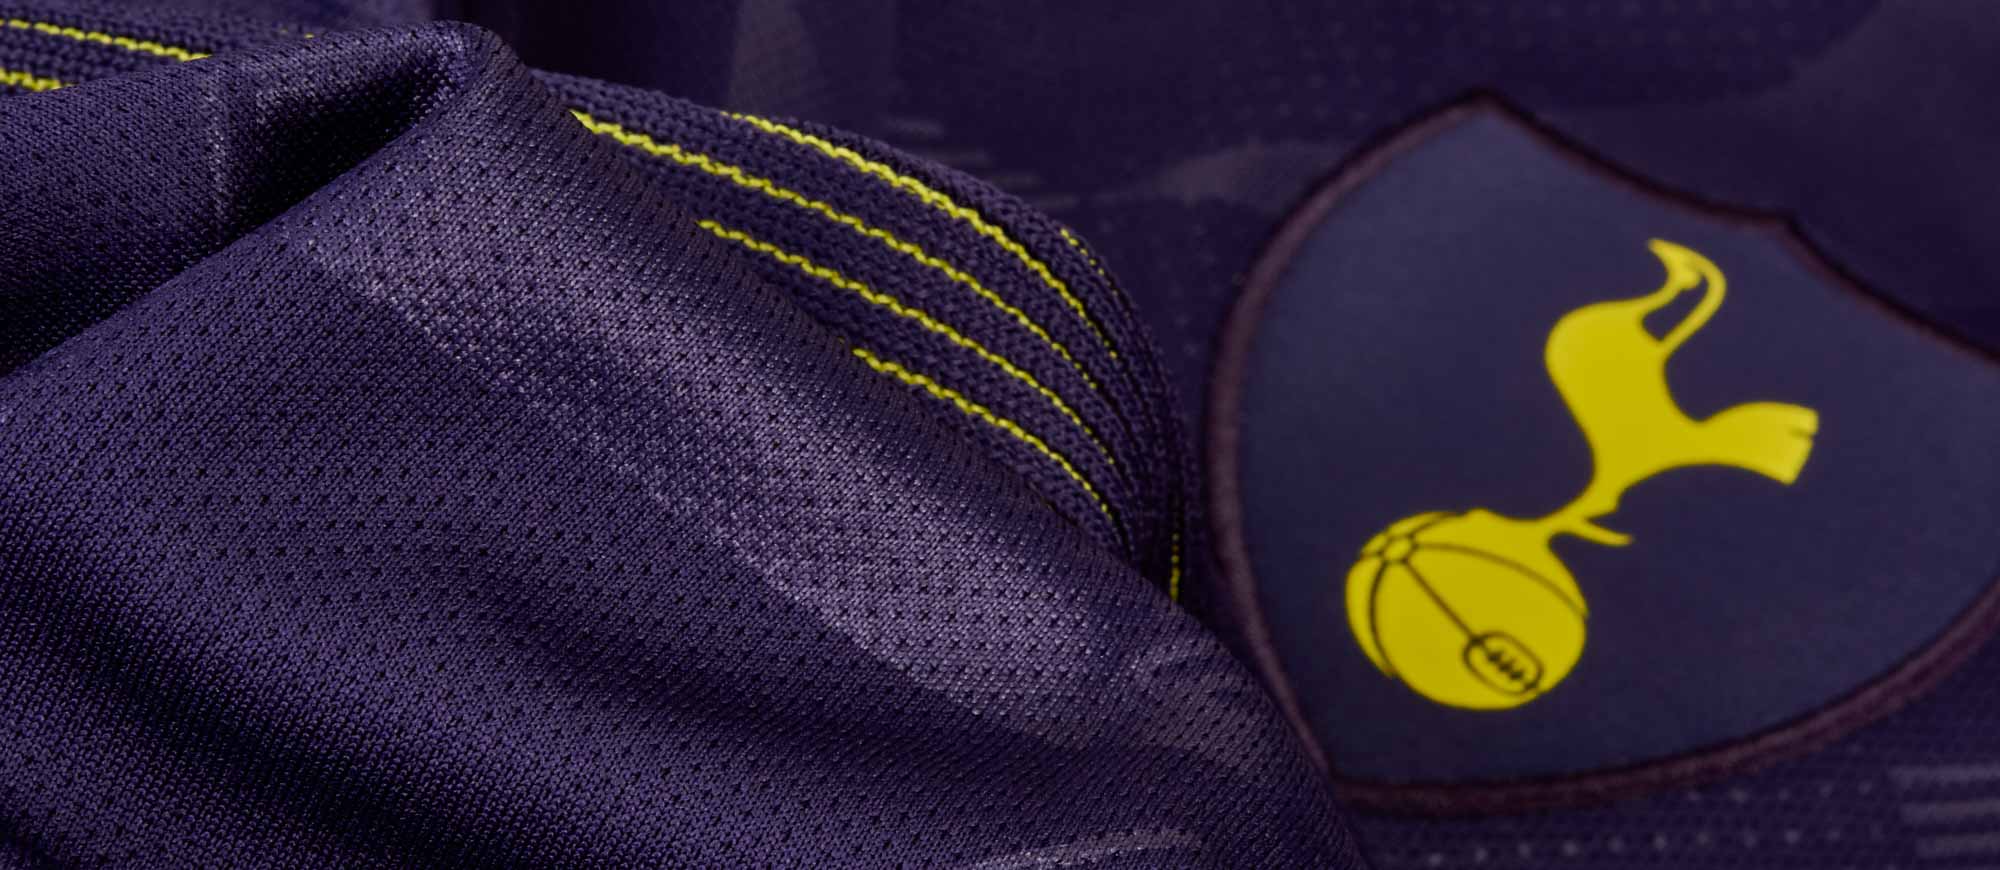 2017/18 Tottenham Hotspur Football Shirt Nike Youth XL Rare Third Purple  Jersey